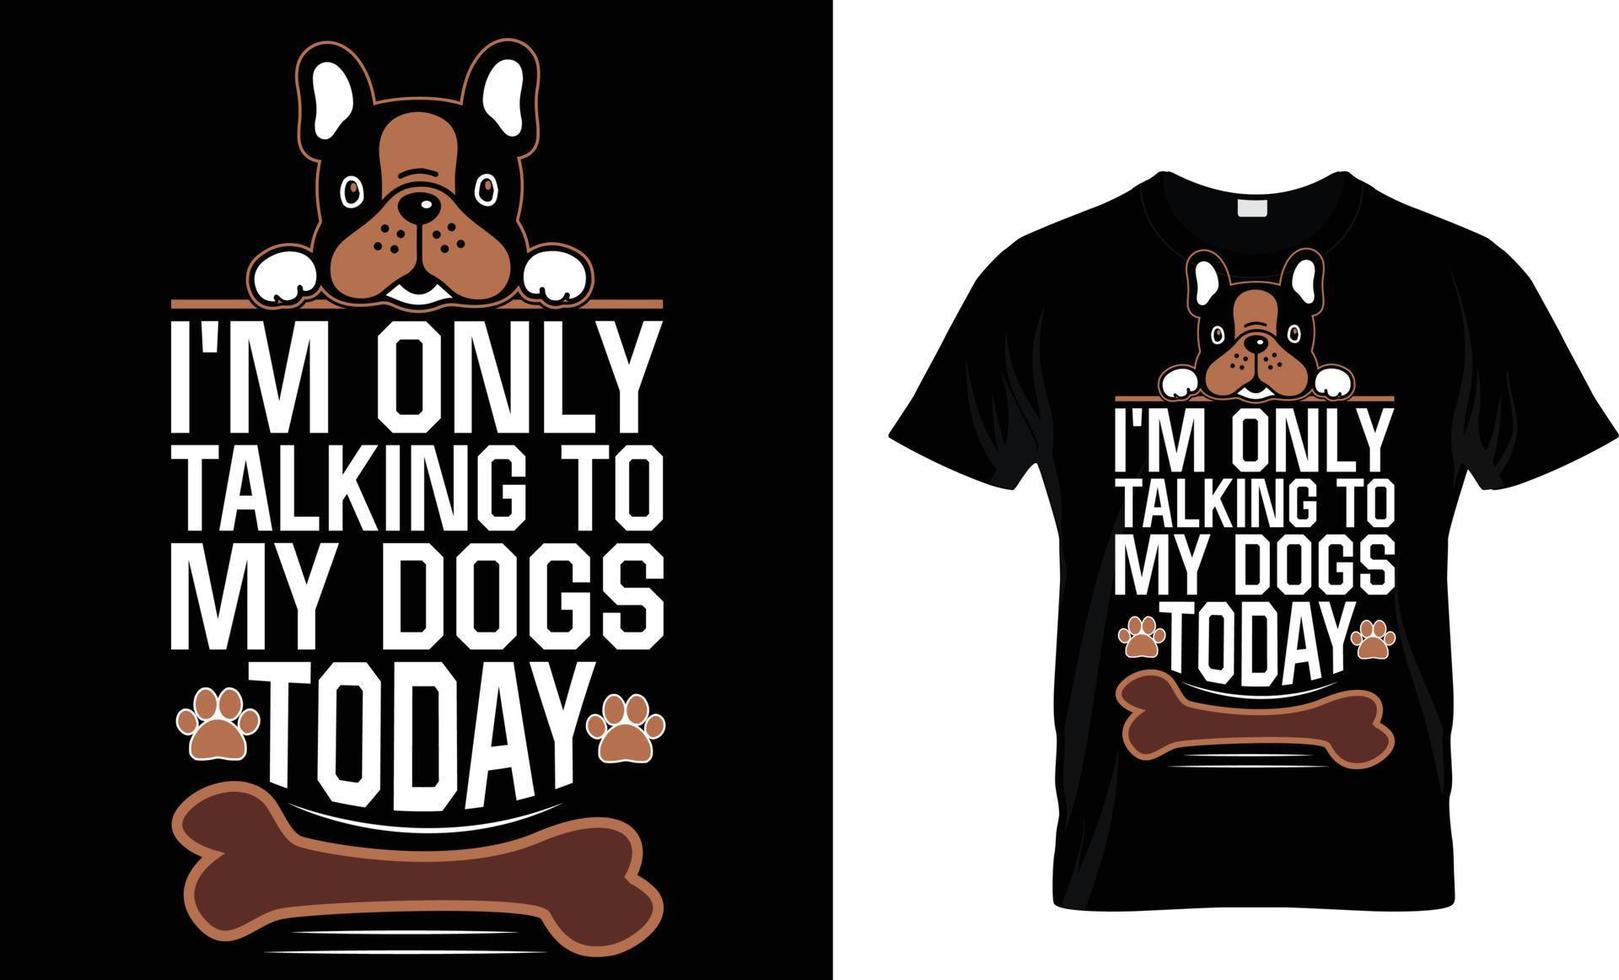 hund, vovve, Tass, sällskapsdjur typografi t-shirt design vektor